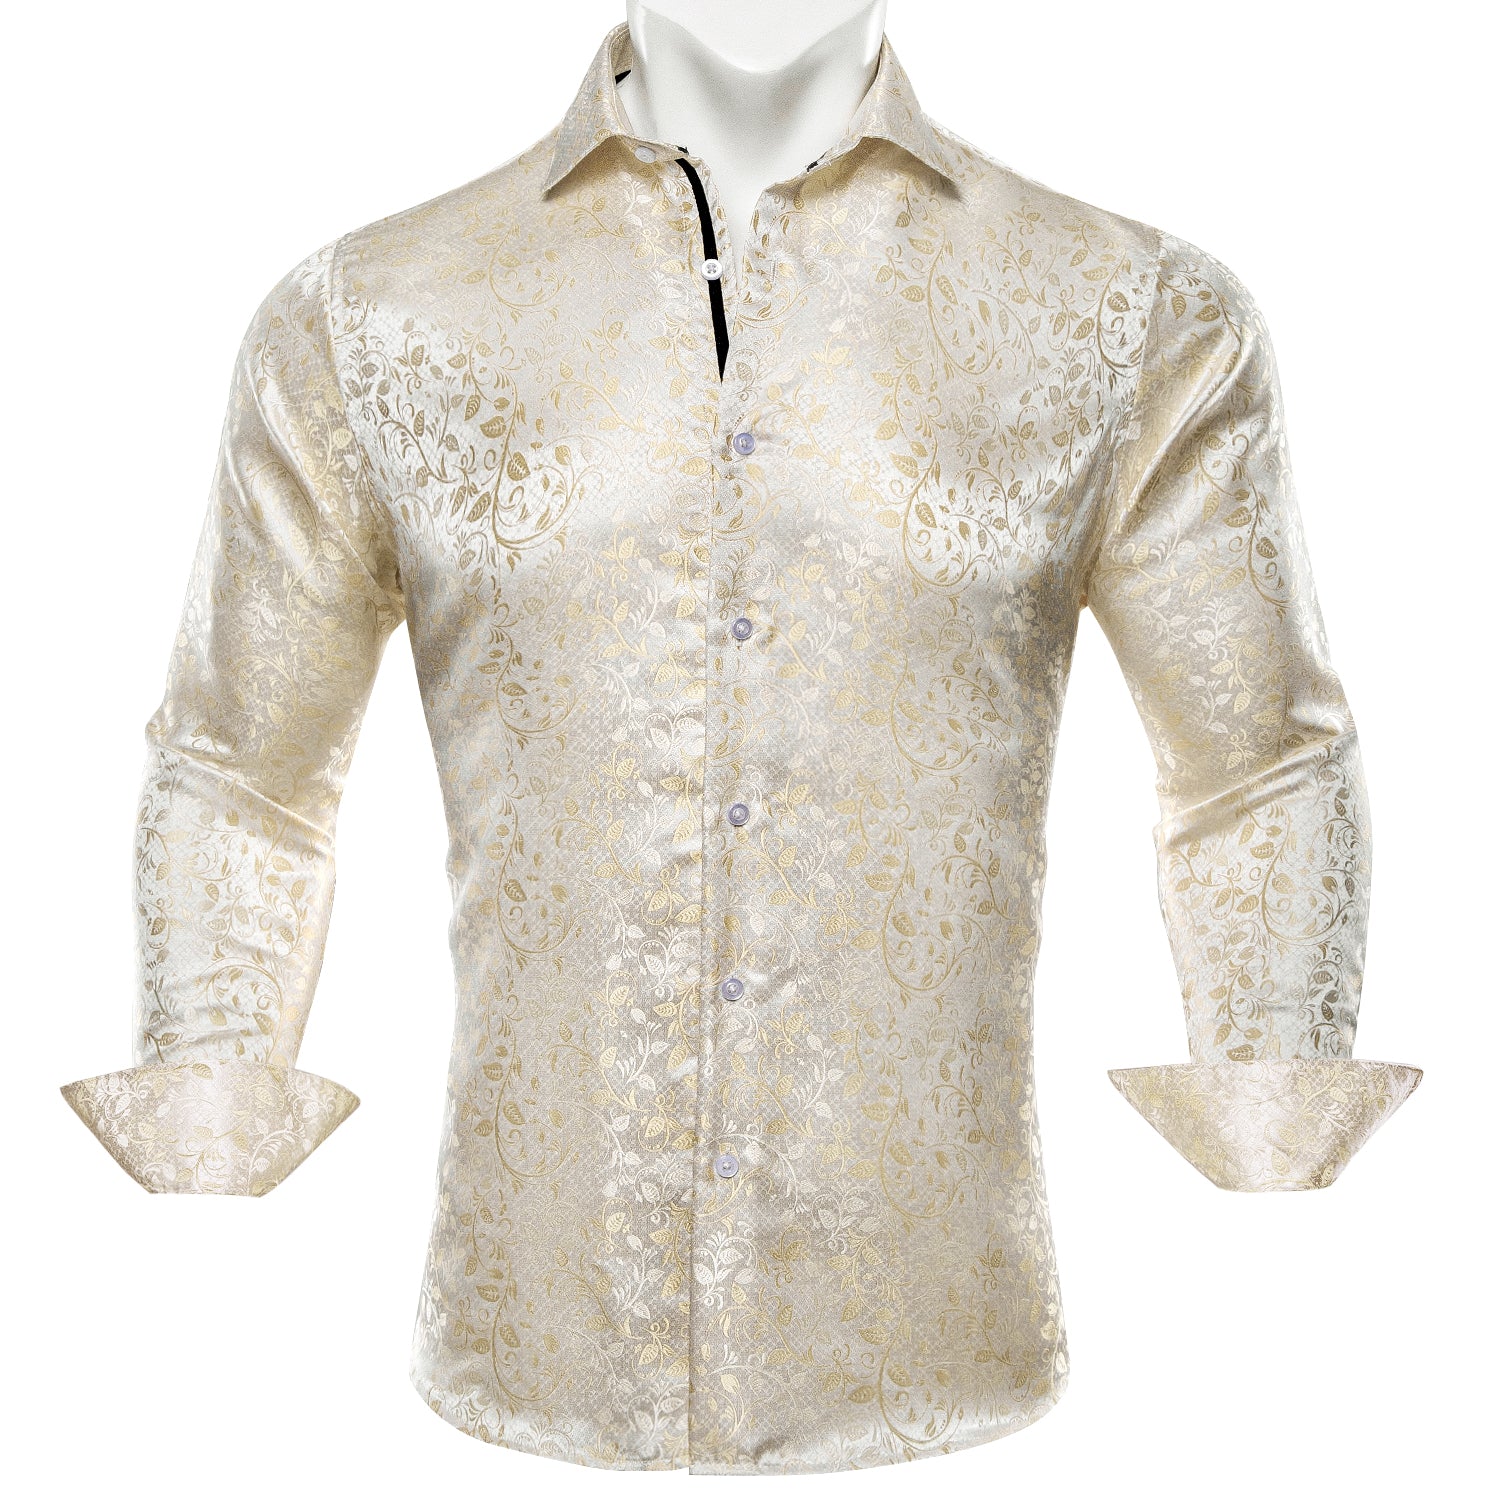 Barry.wang Champagne Floral Silk Men's Shirt